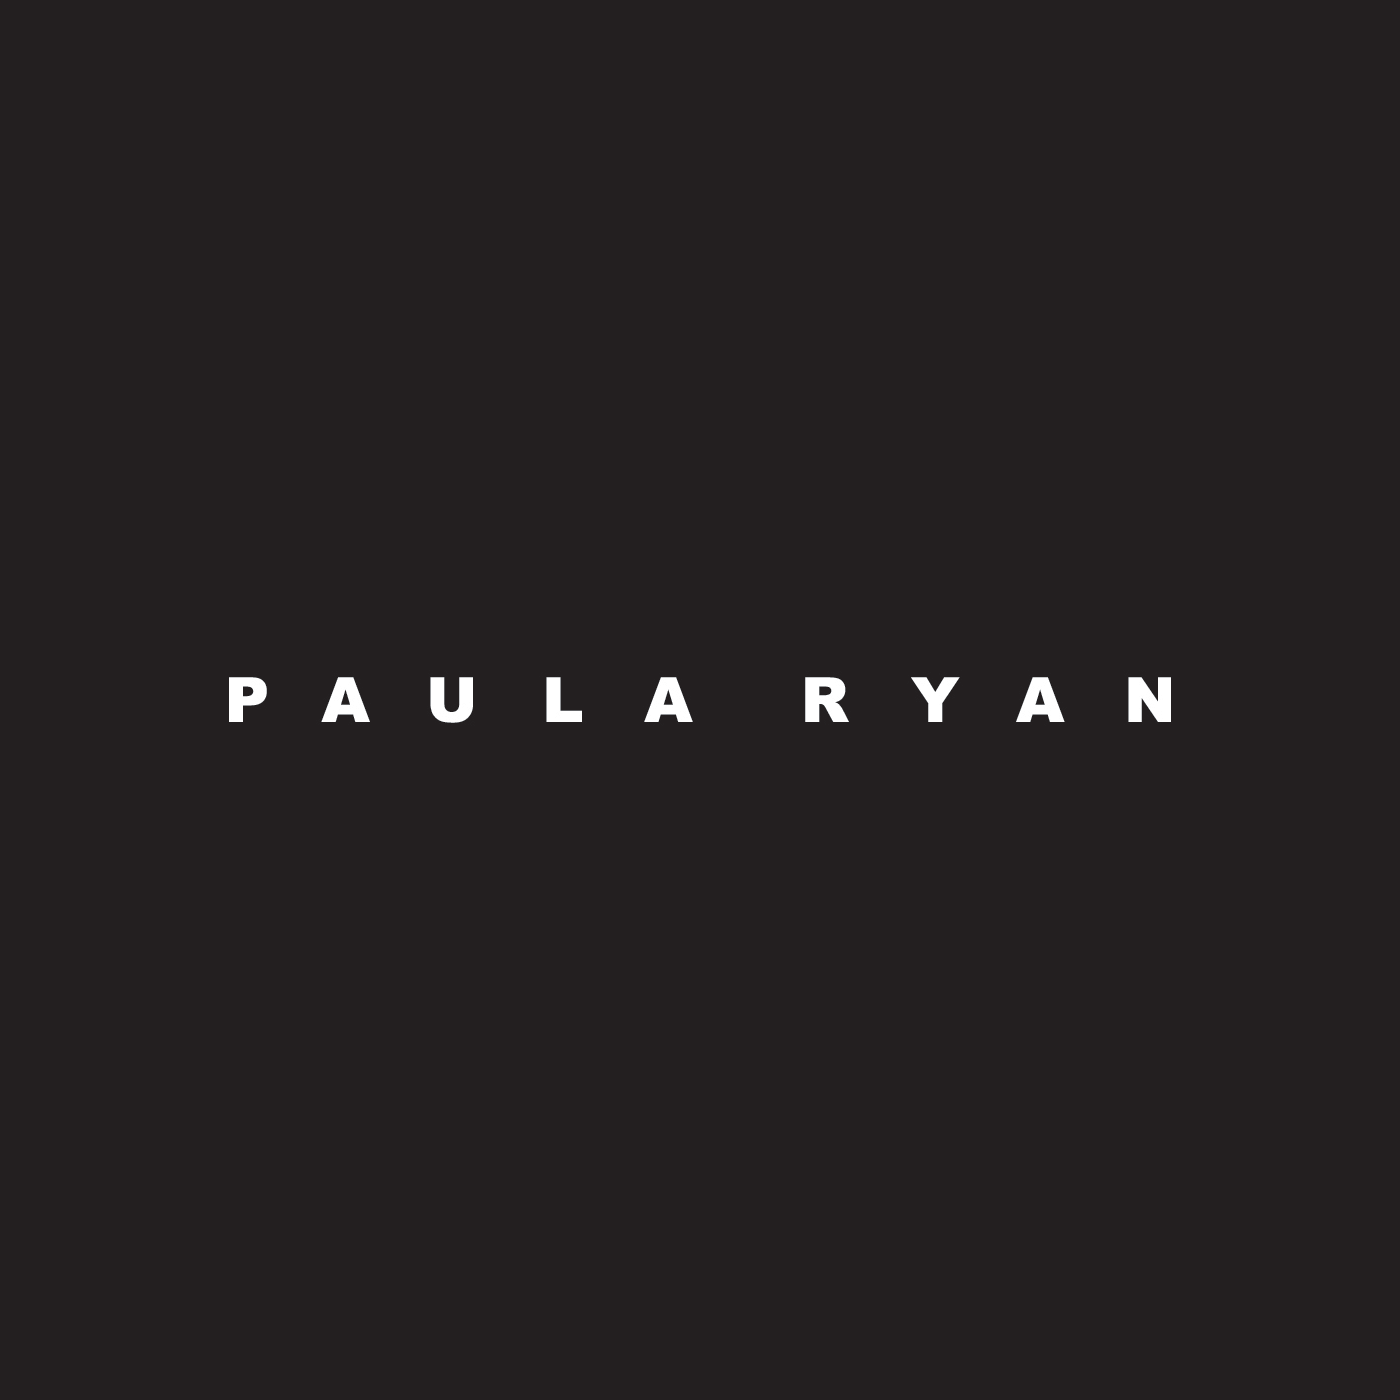 Paula Ryan Logo